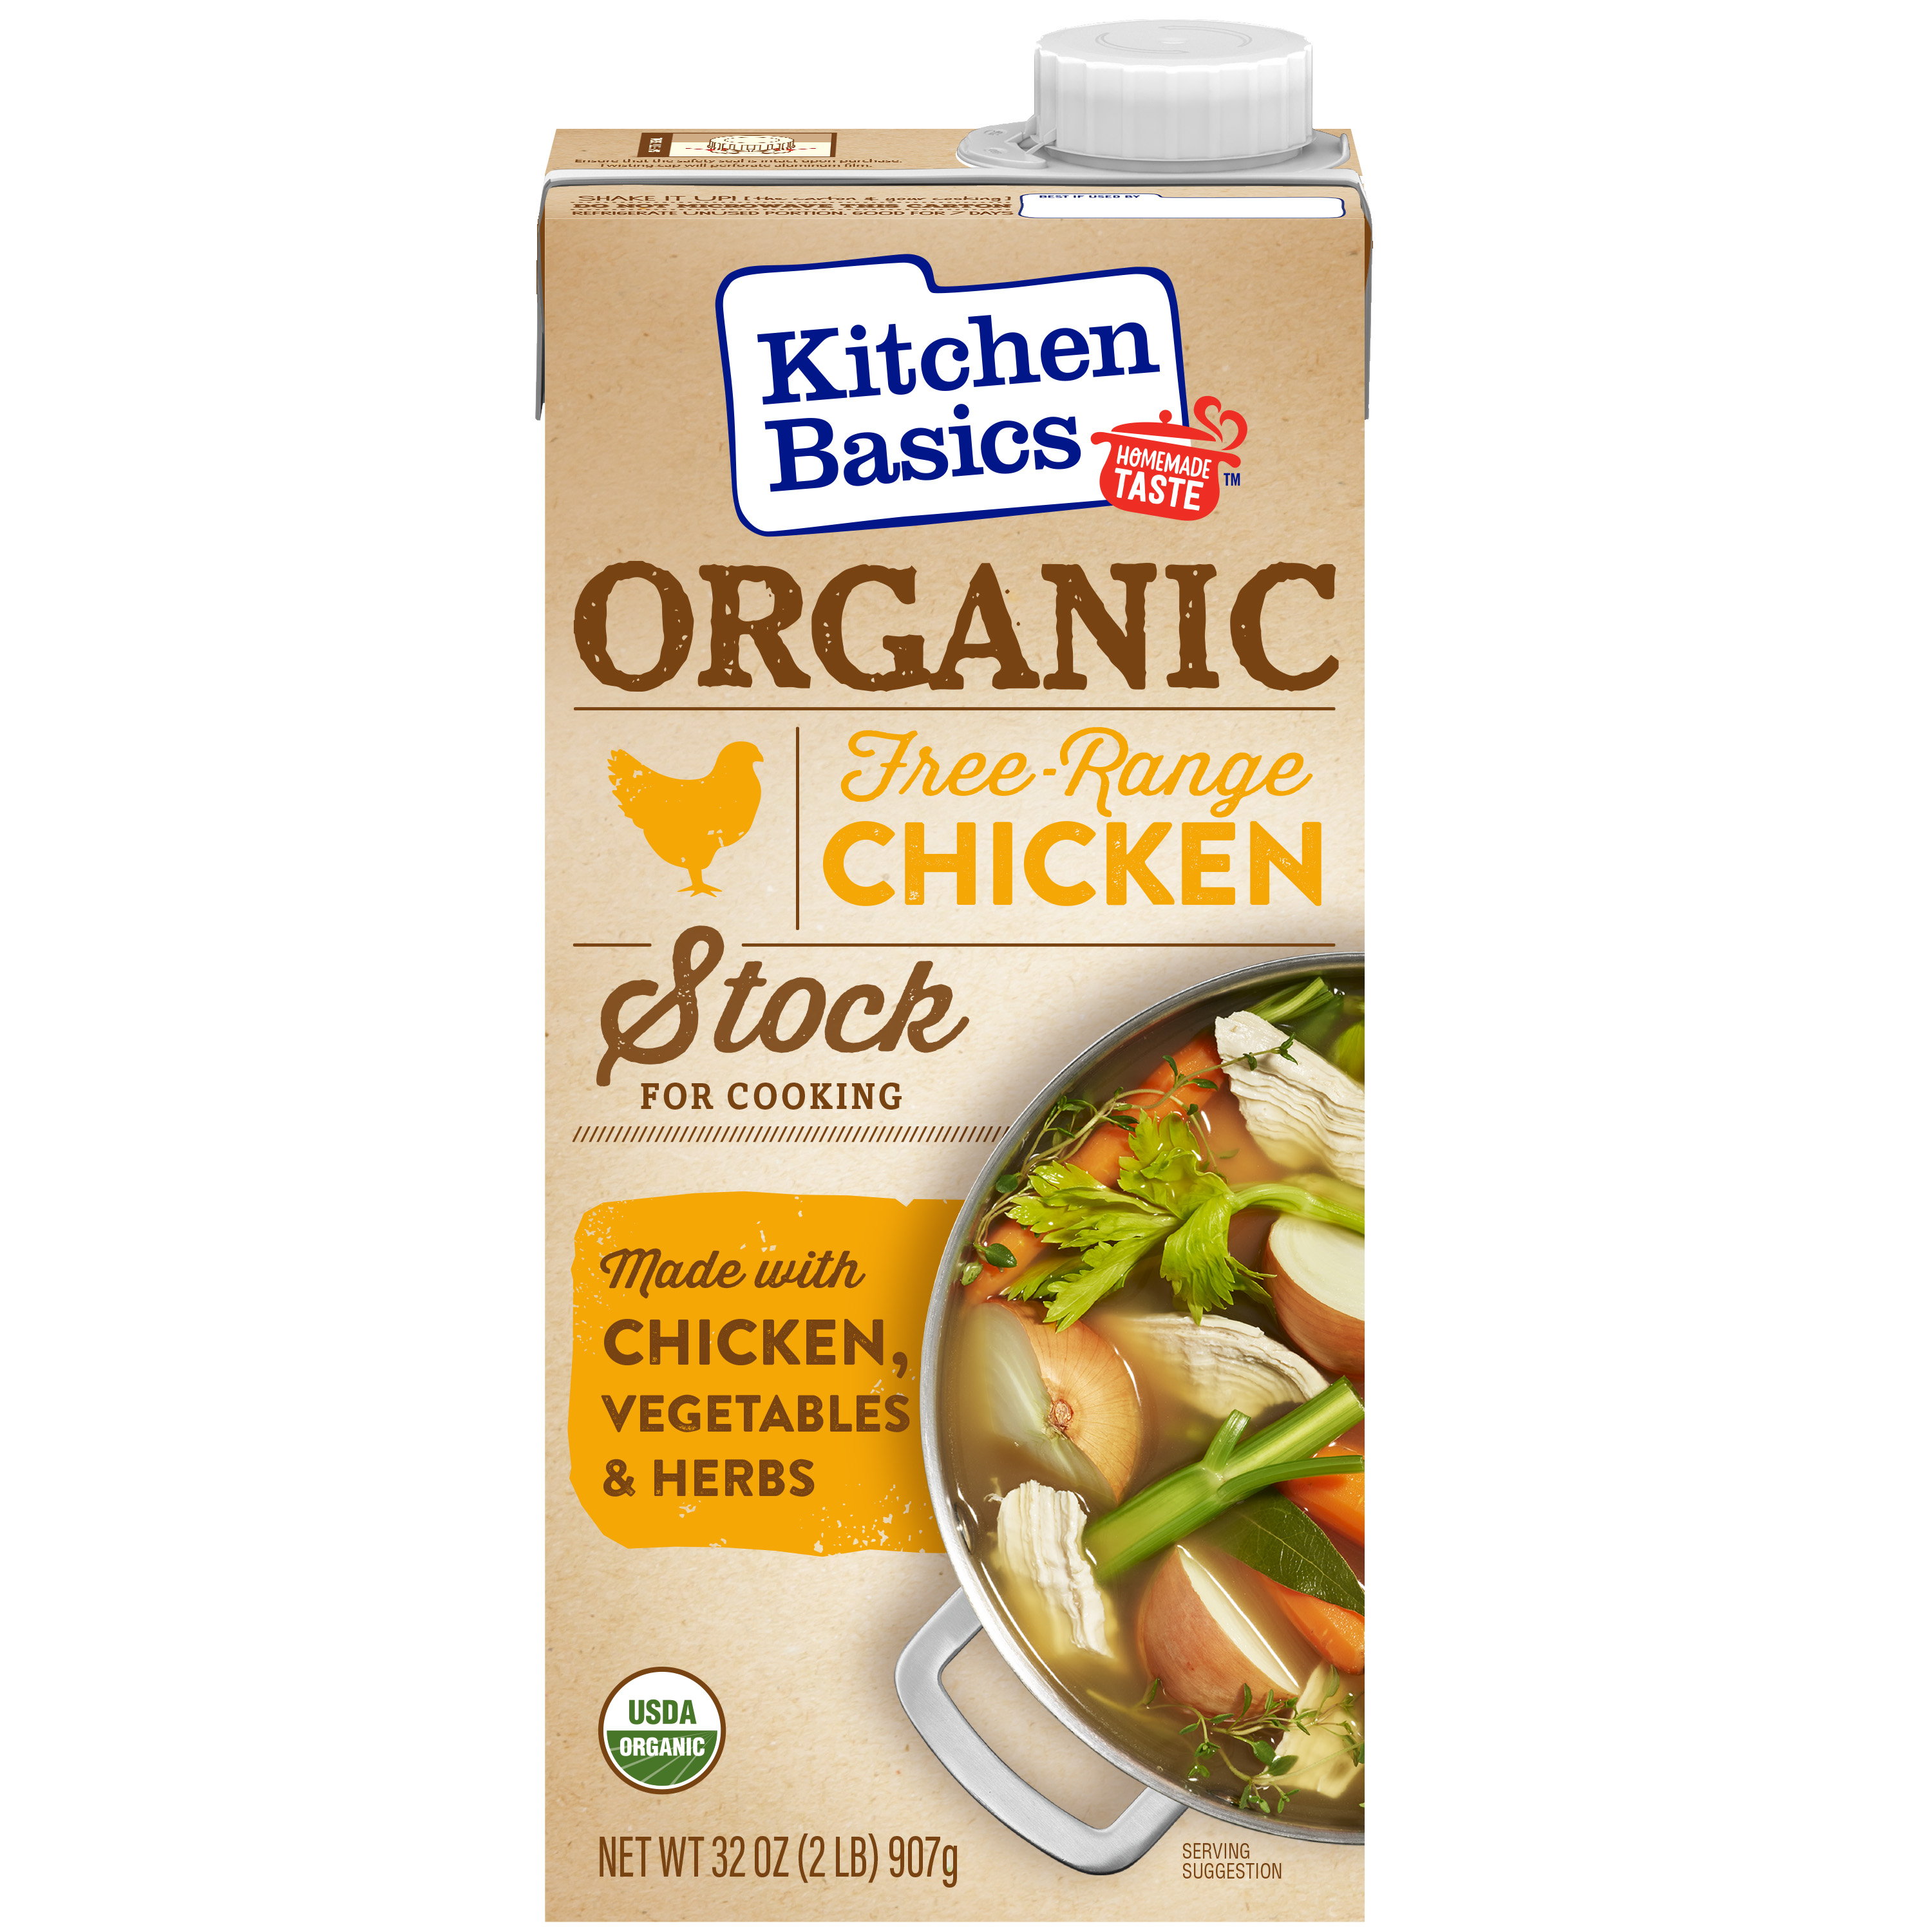 Kitchen Basics Organic Free Range Chicken Stock, 32 oz Carton, front